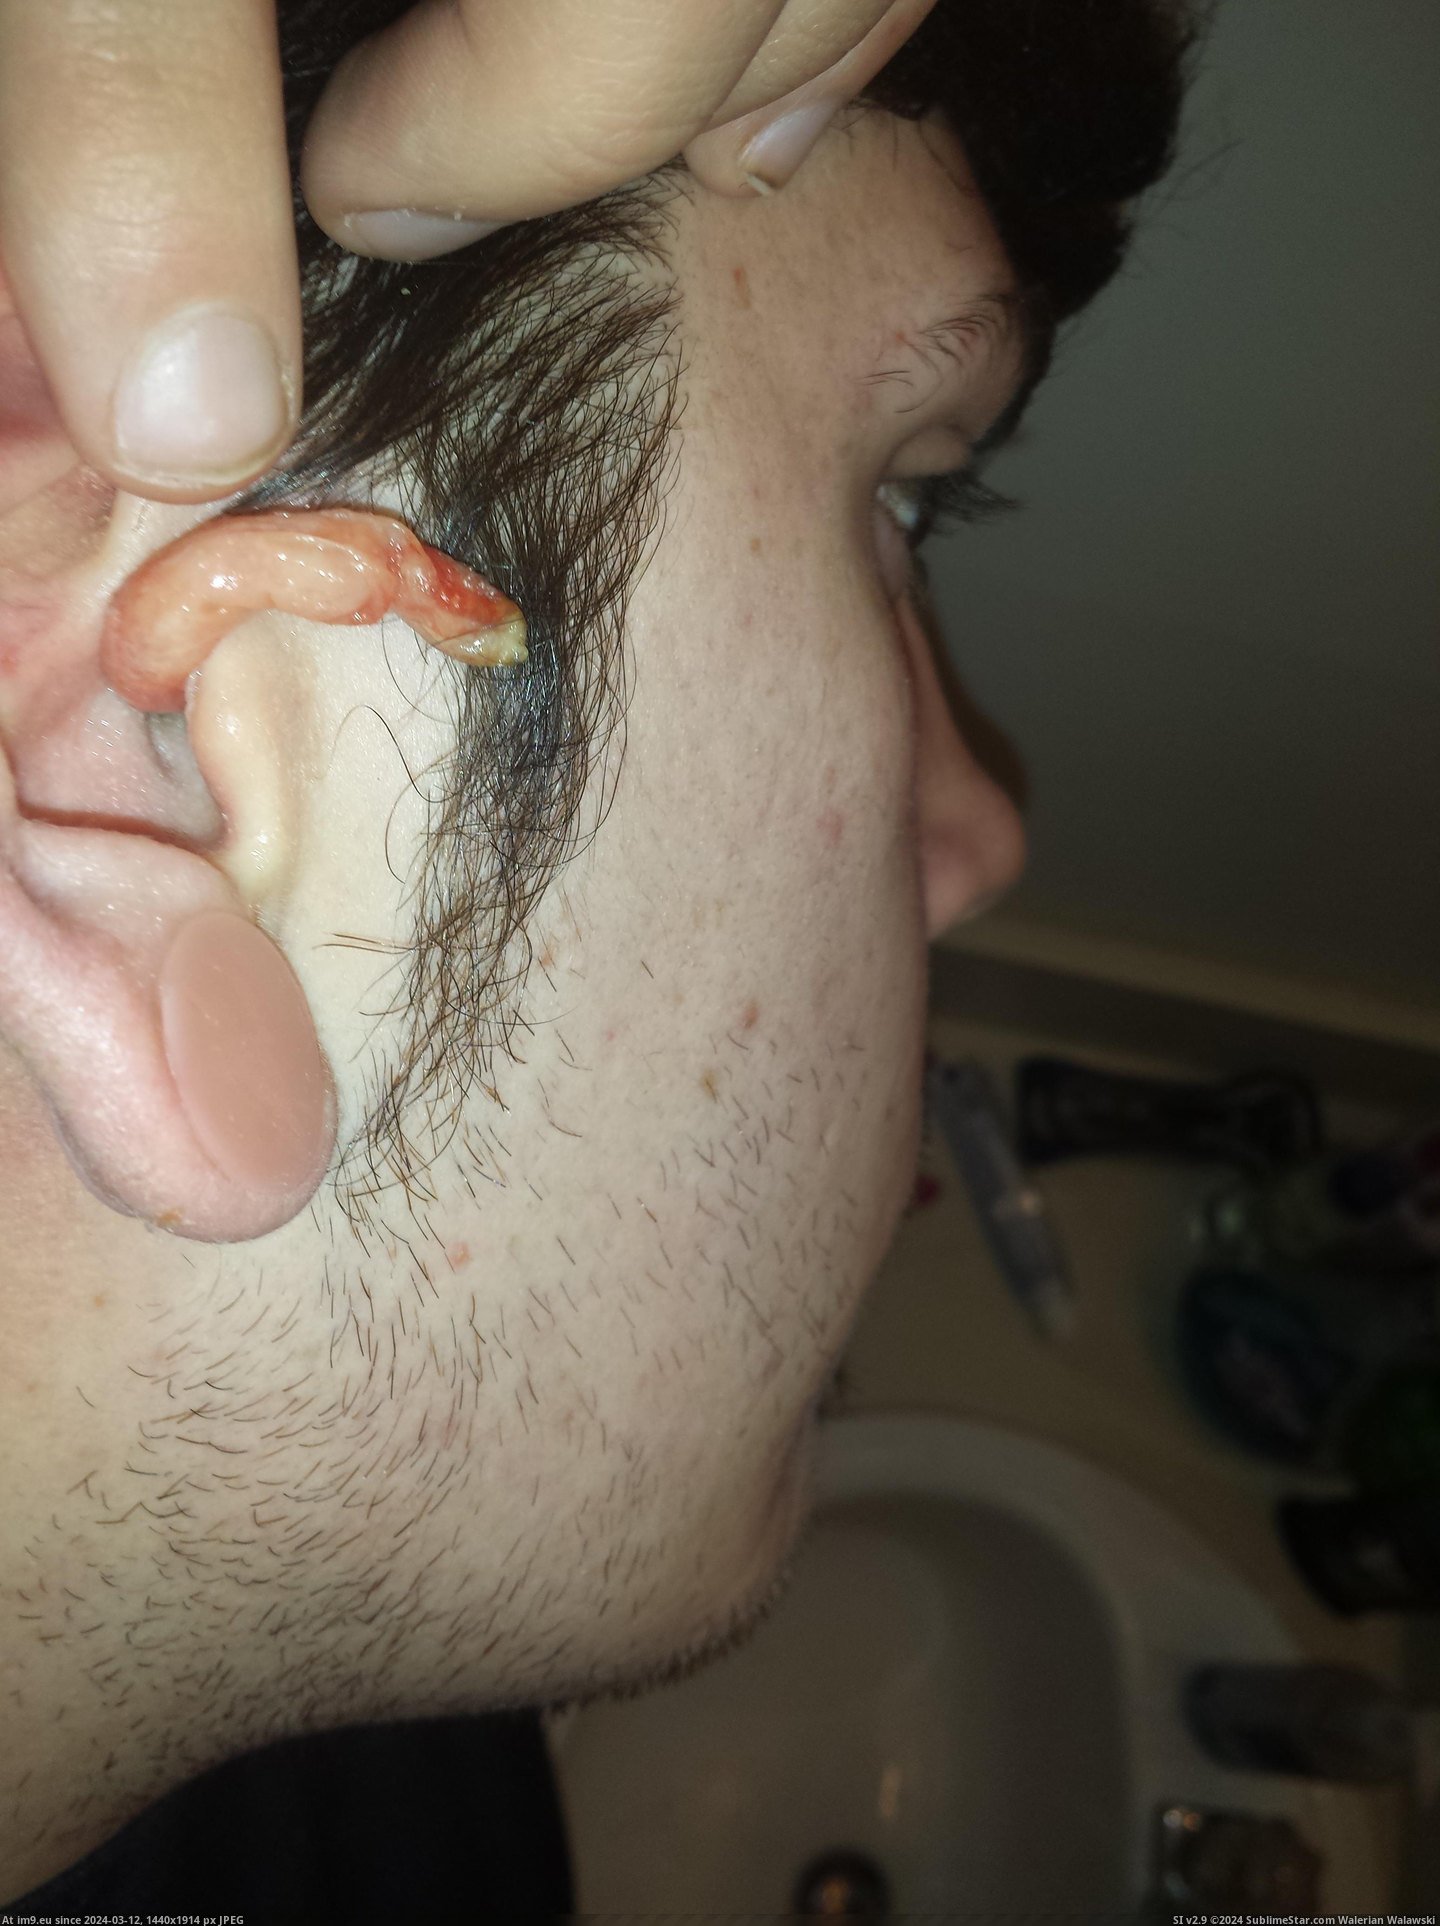 #Wtf #Ear #Infection #Crazy [Wtf] My crazy ear infection 14 Pic. (Bild von album My r/WTF favs))